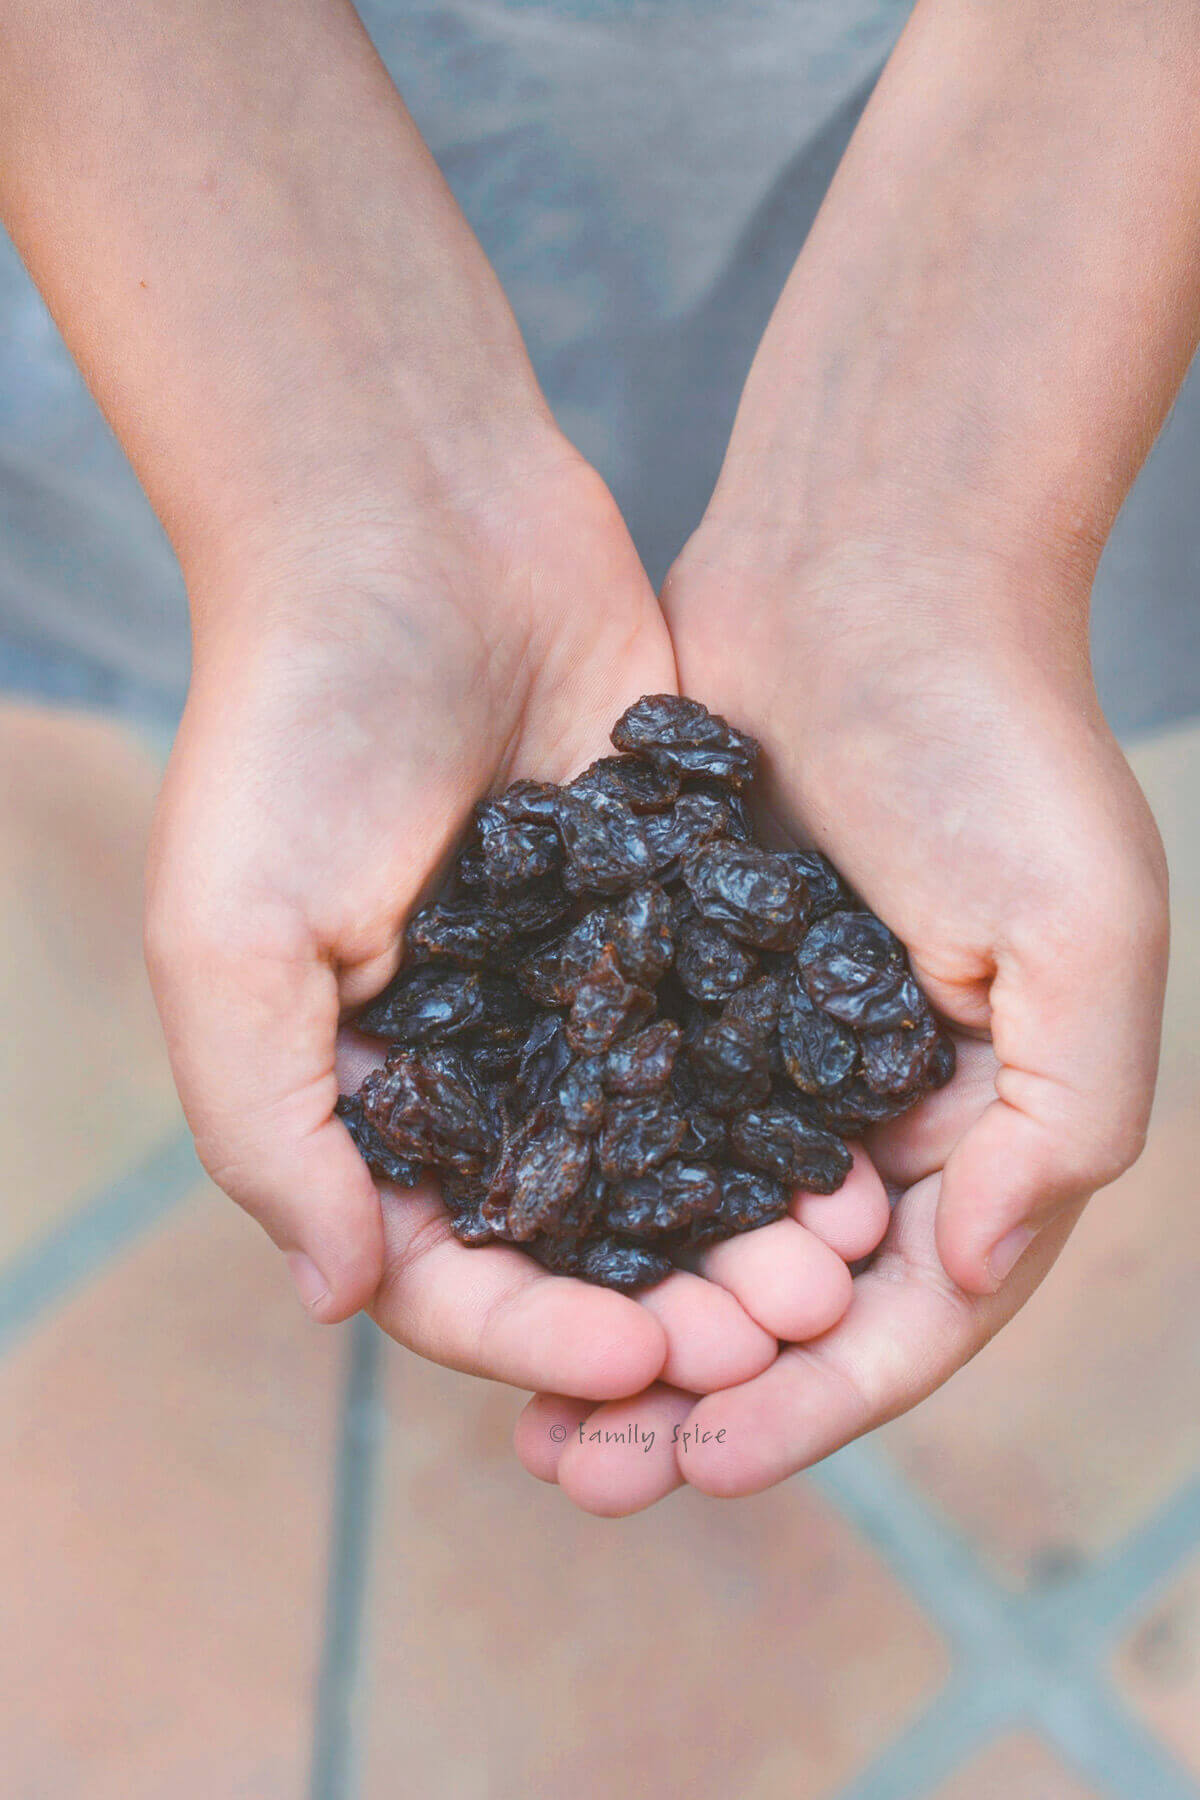 A child's hands holding raisins